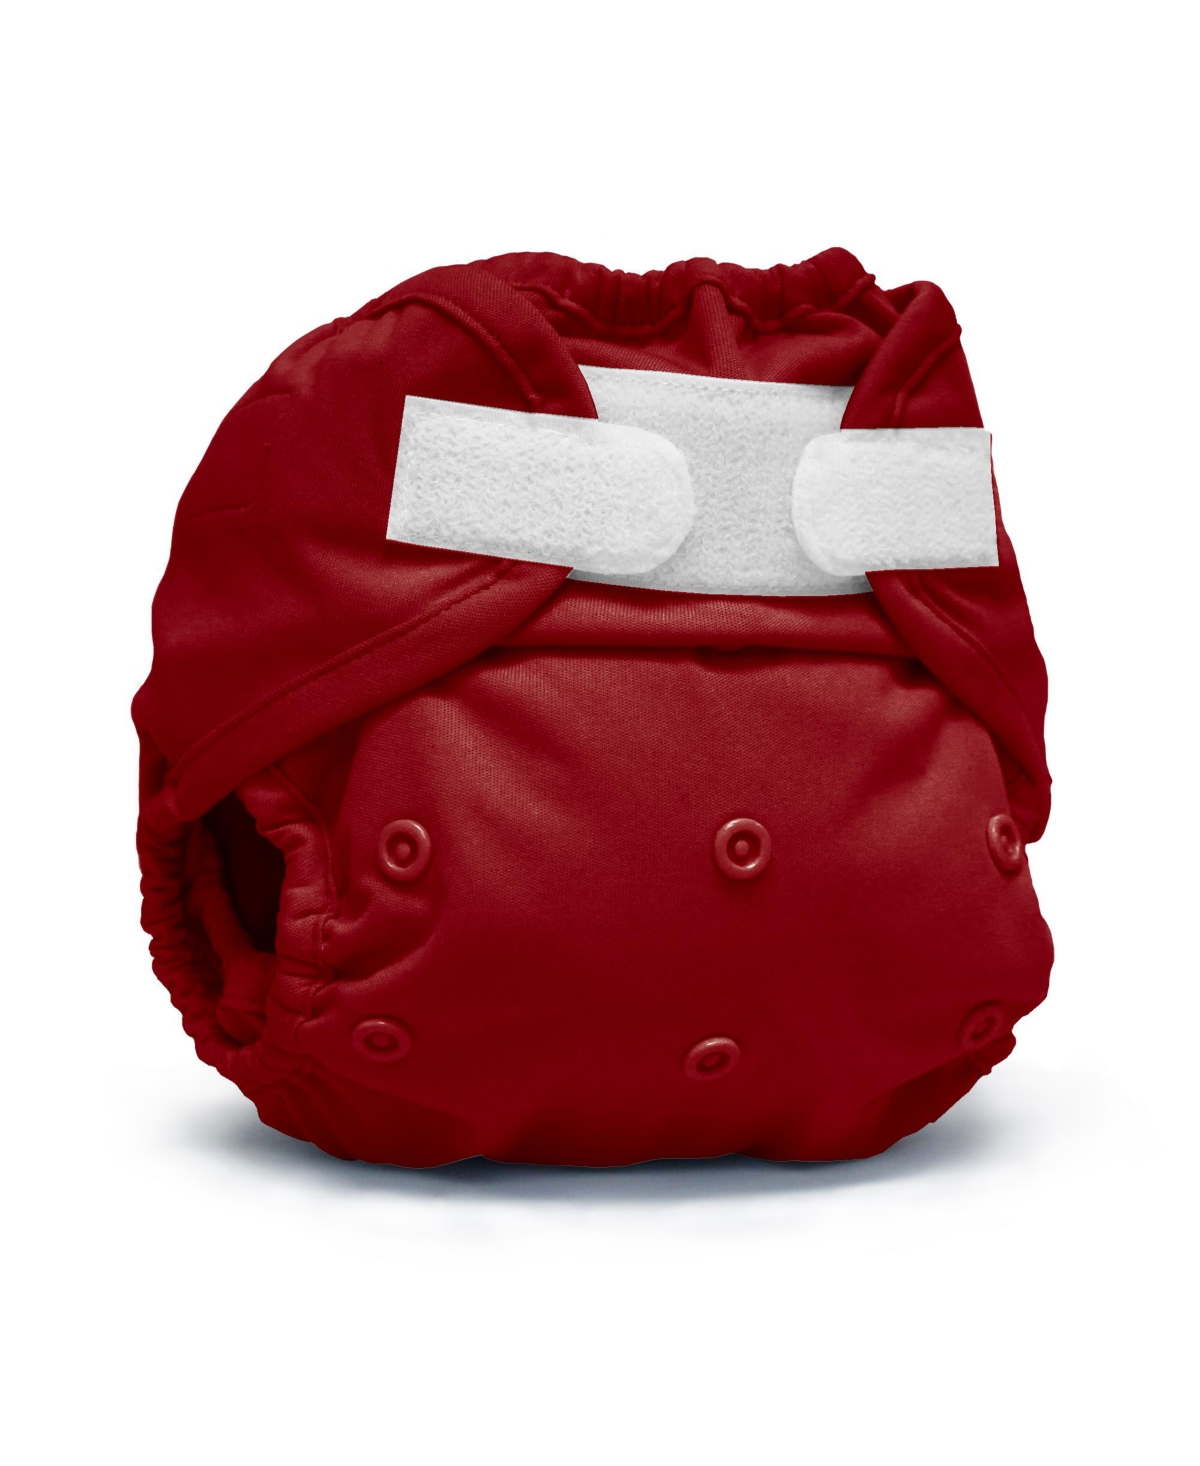 Kanga Care Babies' Rumparooz Reusable One Size Cloth Diaper Cover Aplix In Red